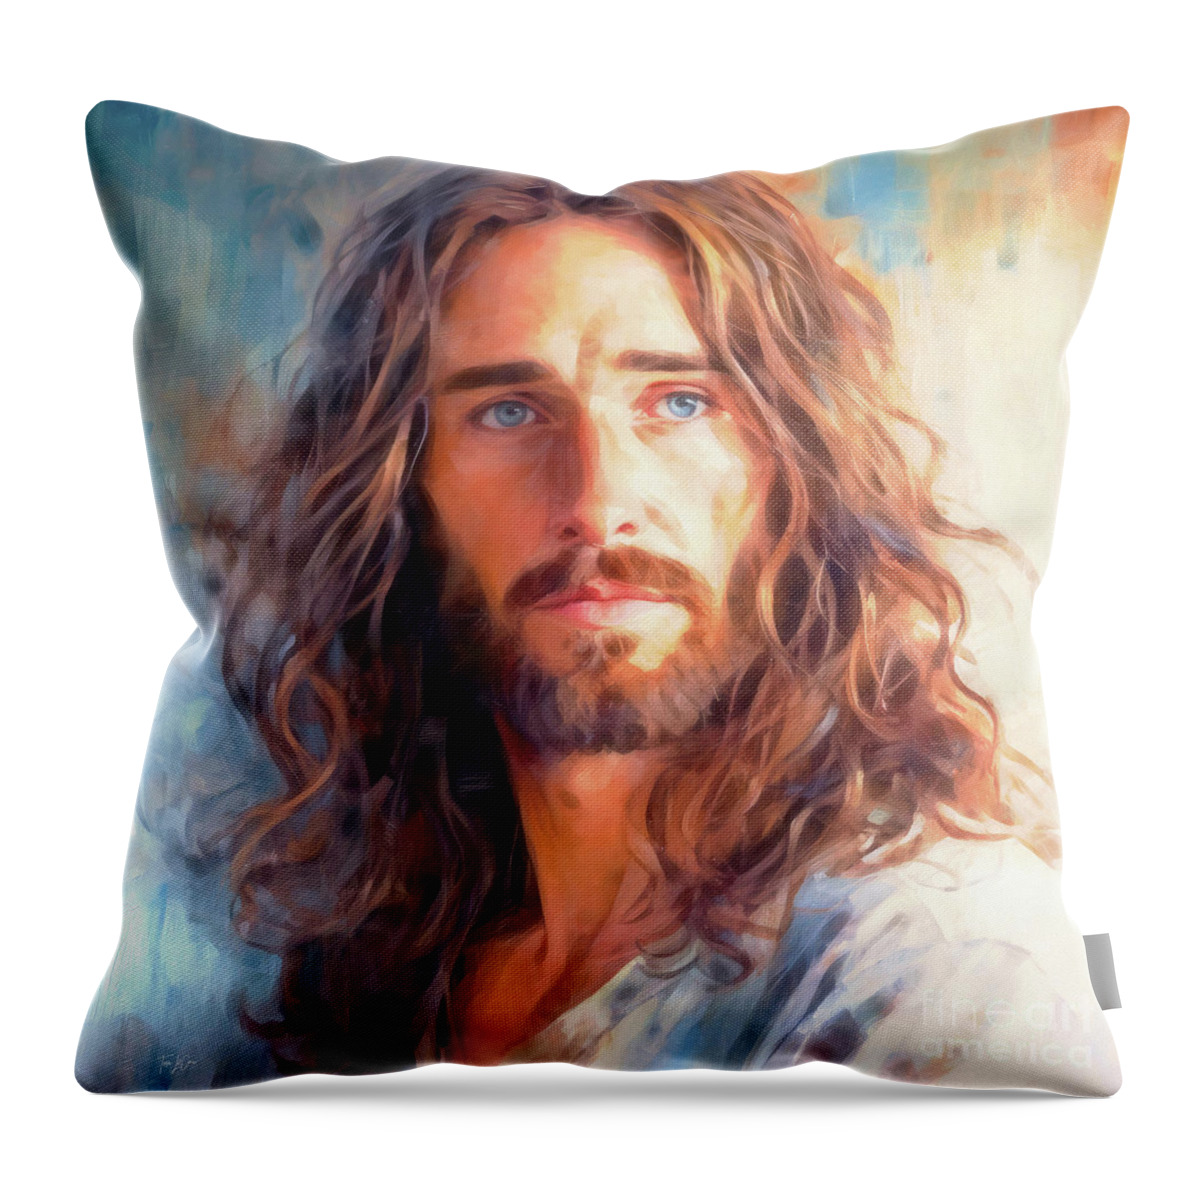  Jesus Christ Throw Pillow featuring the painting The Saviour by Tina LeCour